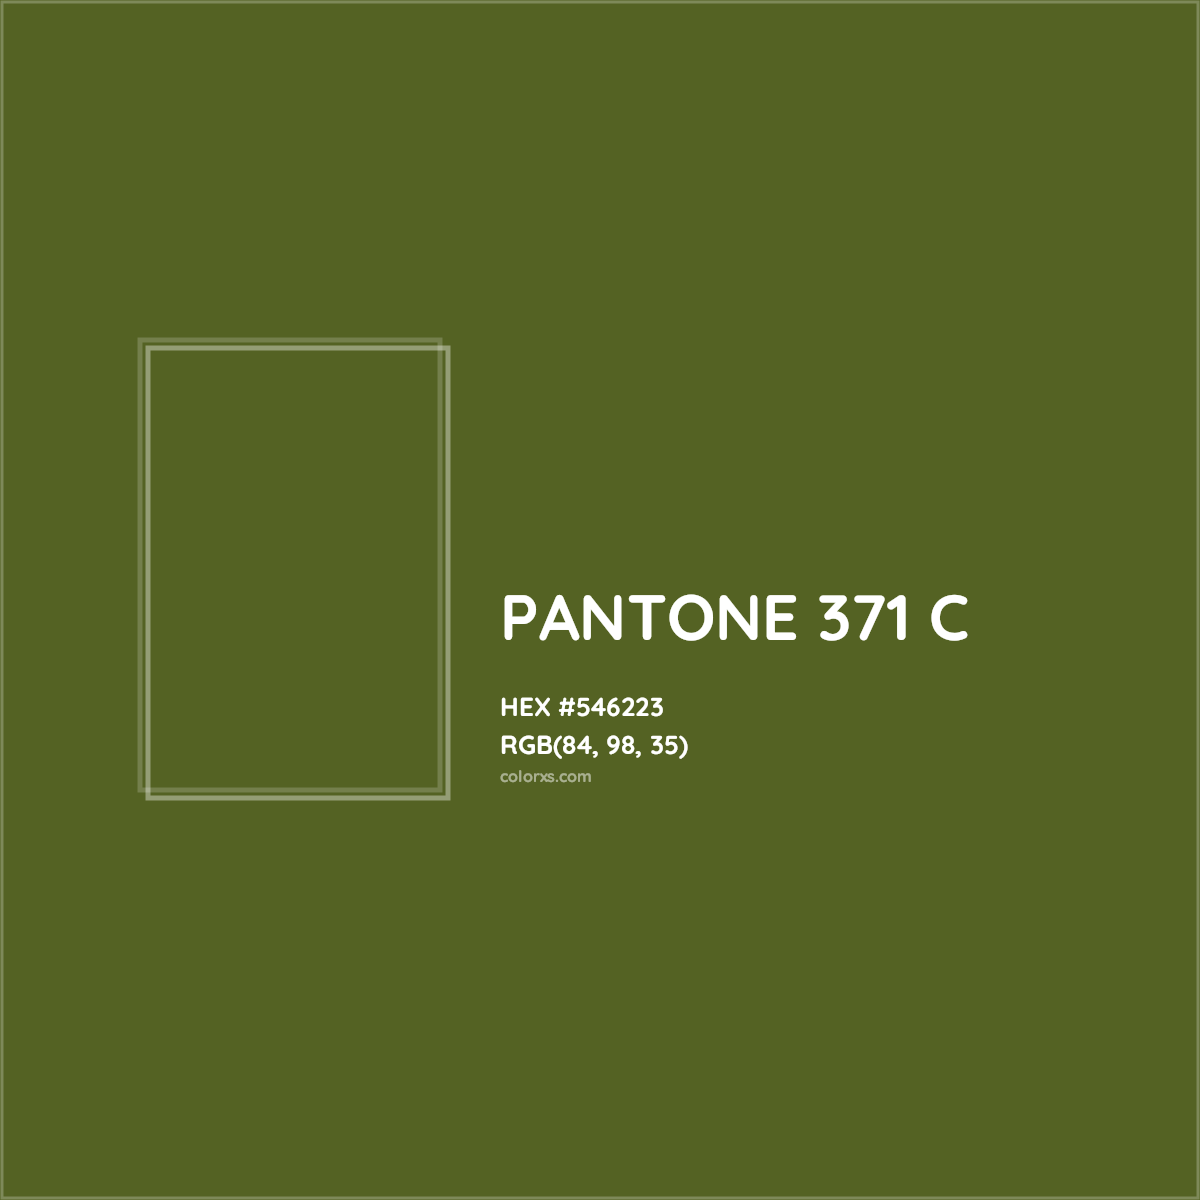 HEX #546223 PANTONE 371 C CMS Pantone PMS - Color Code